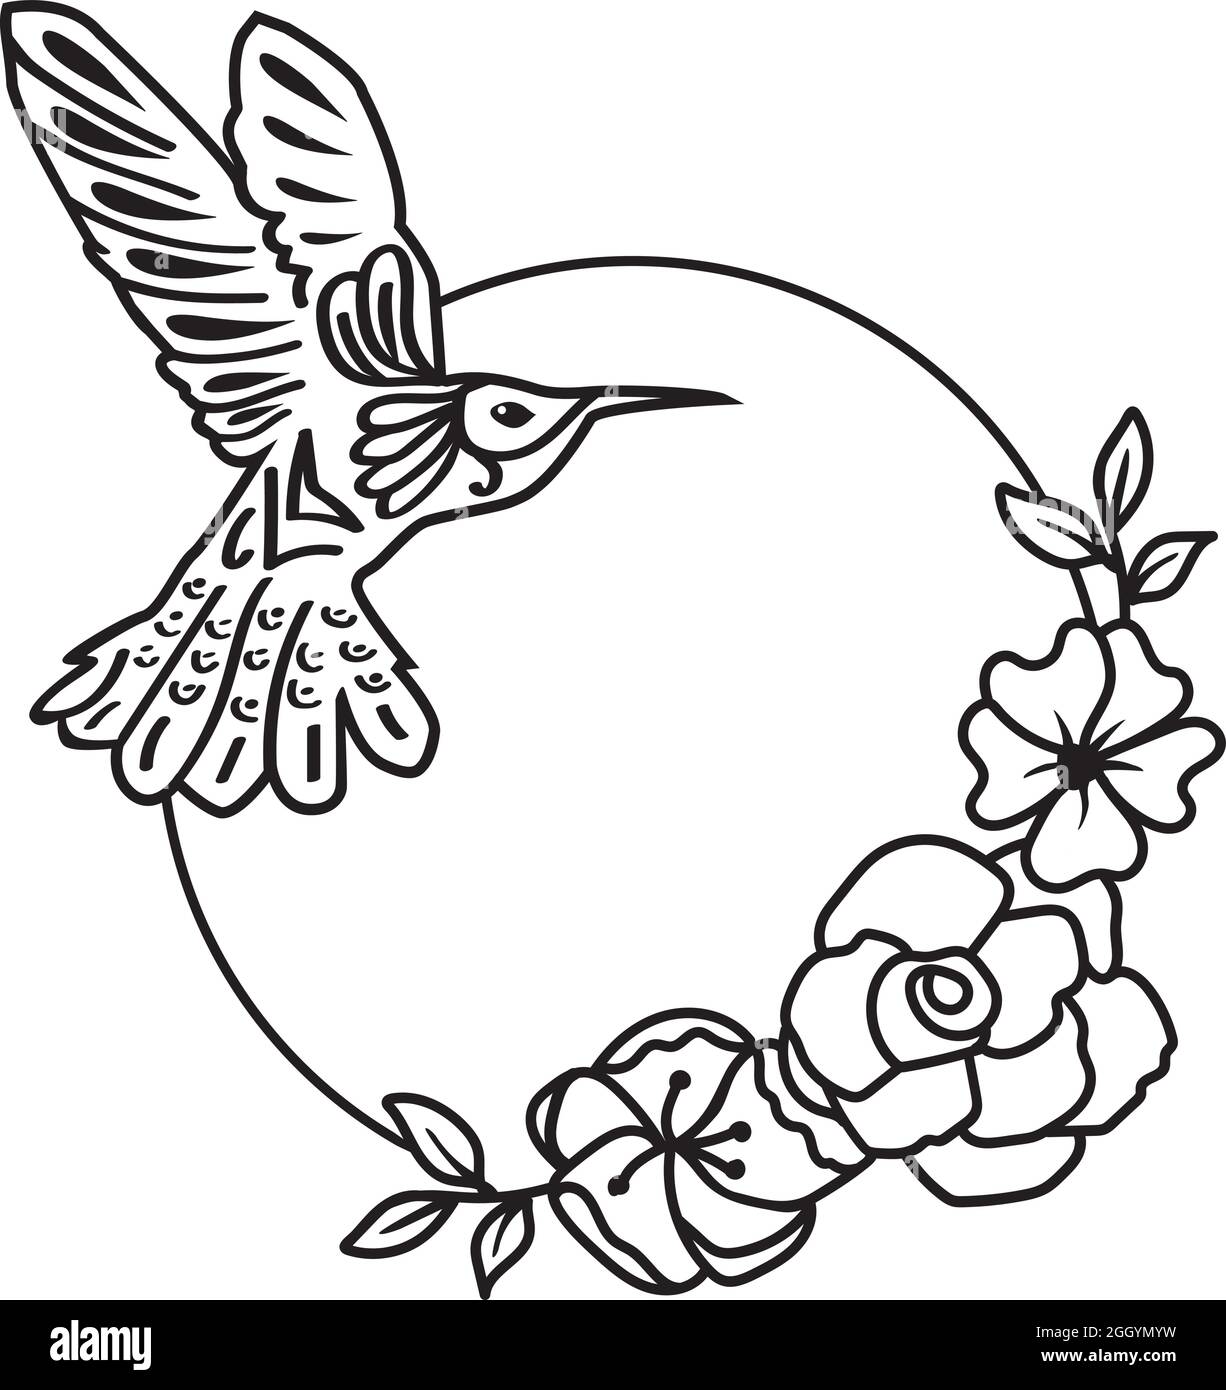 vektor-Illustration eines floralen Rahmens mit einem Kolibri Stock Vektor